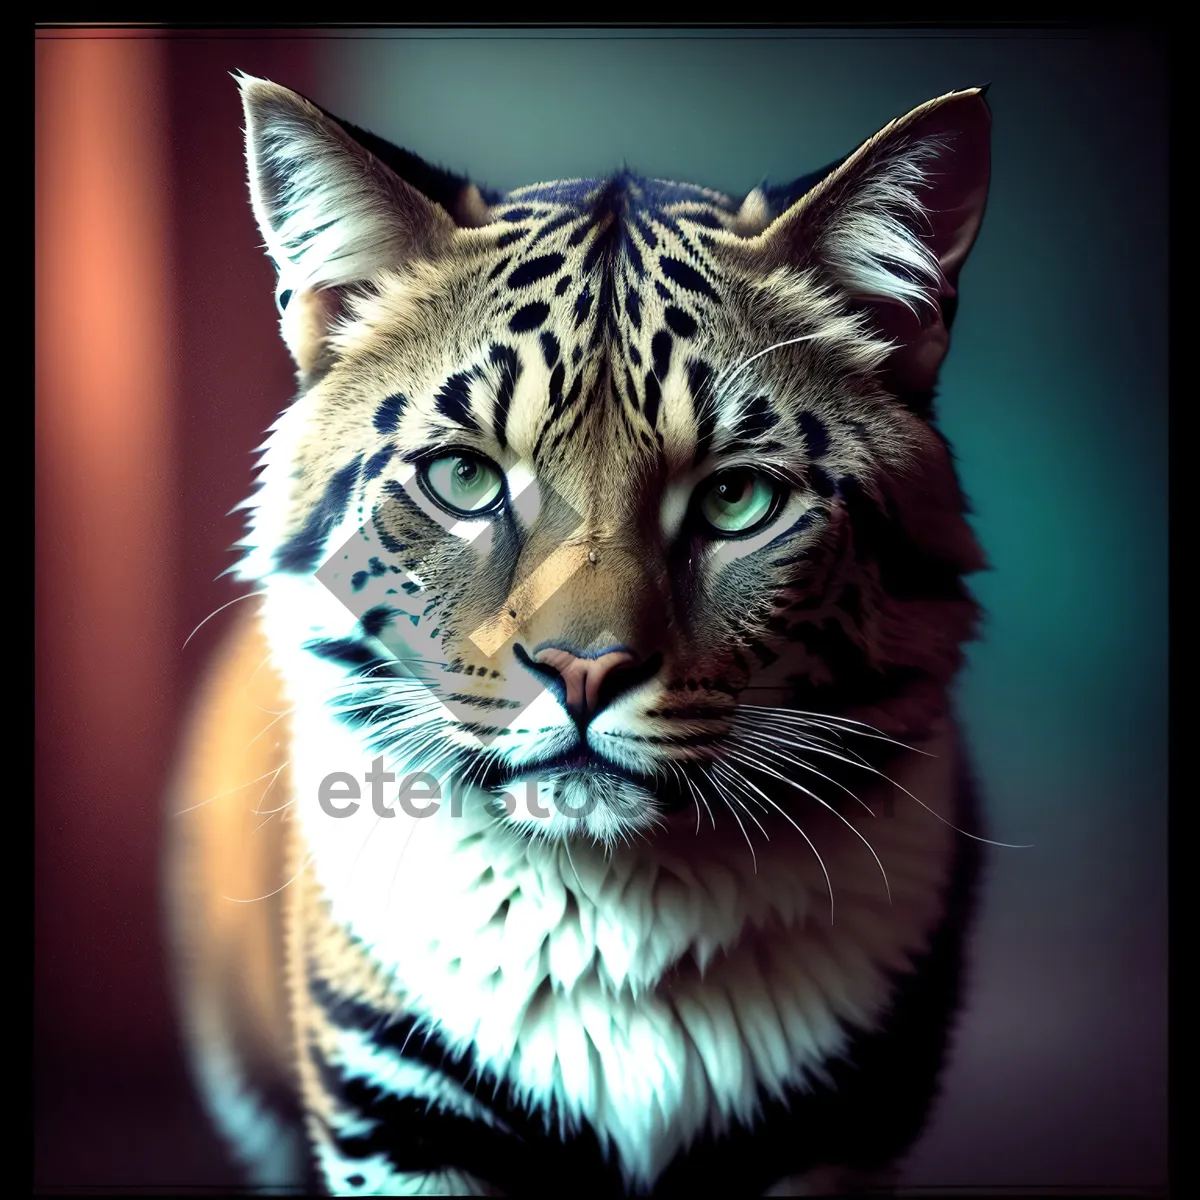 Picture of Fierce Feline: Majestic Tiger Cat in the Wild